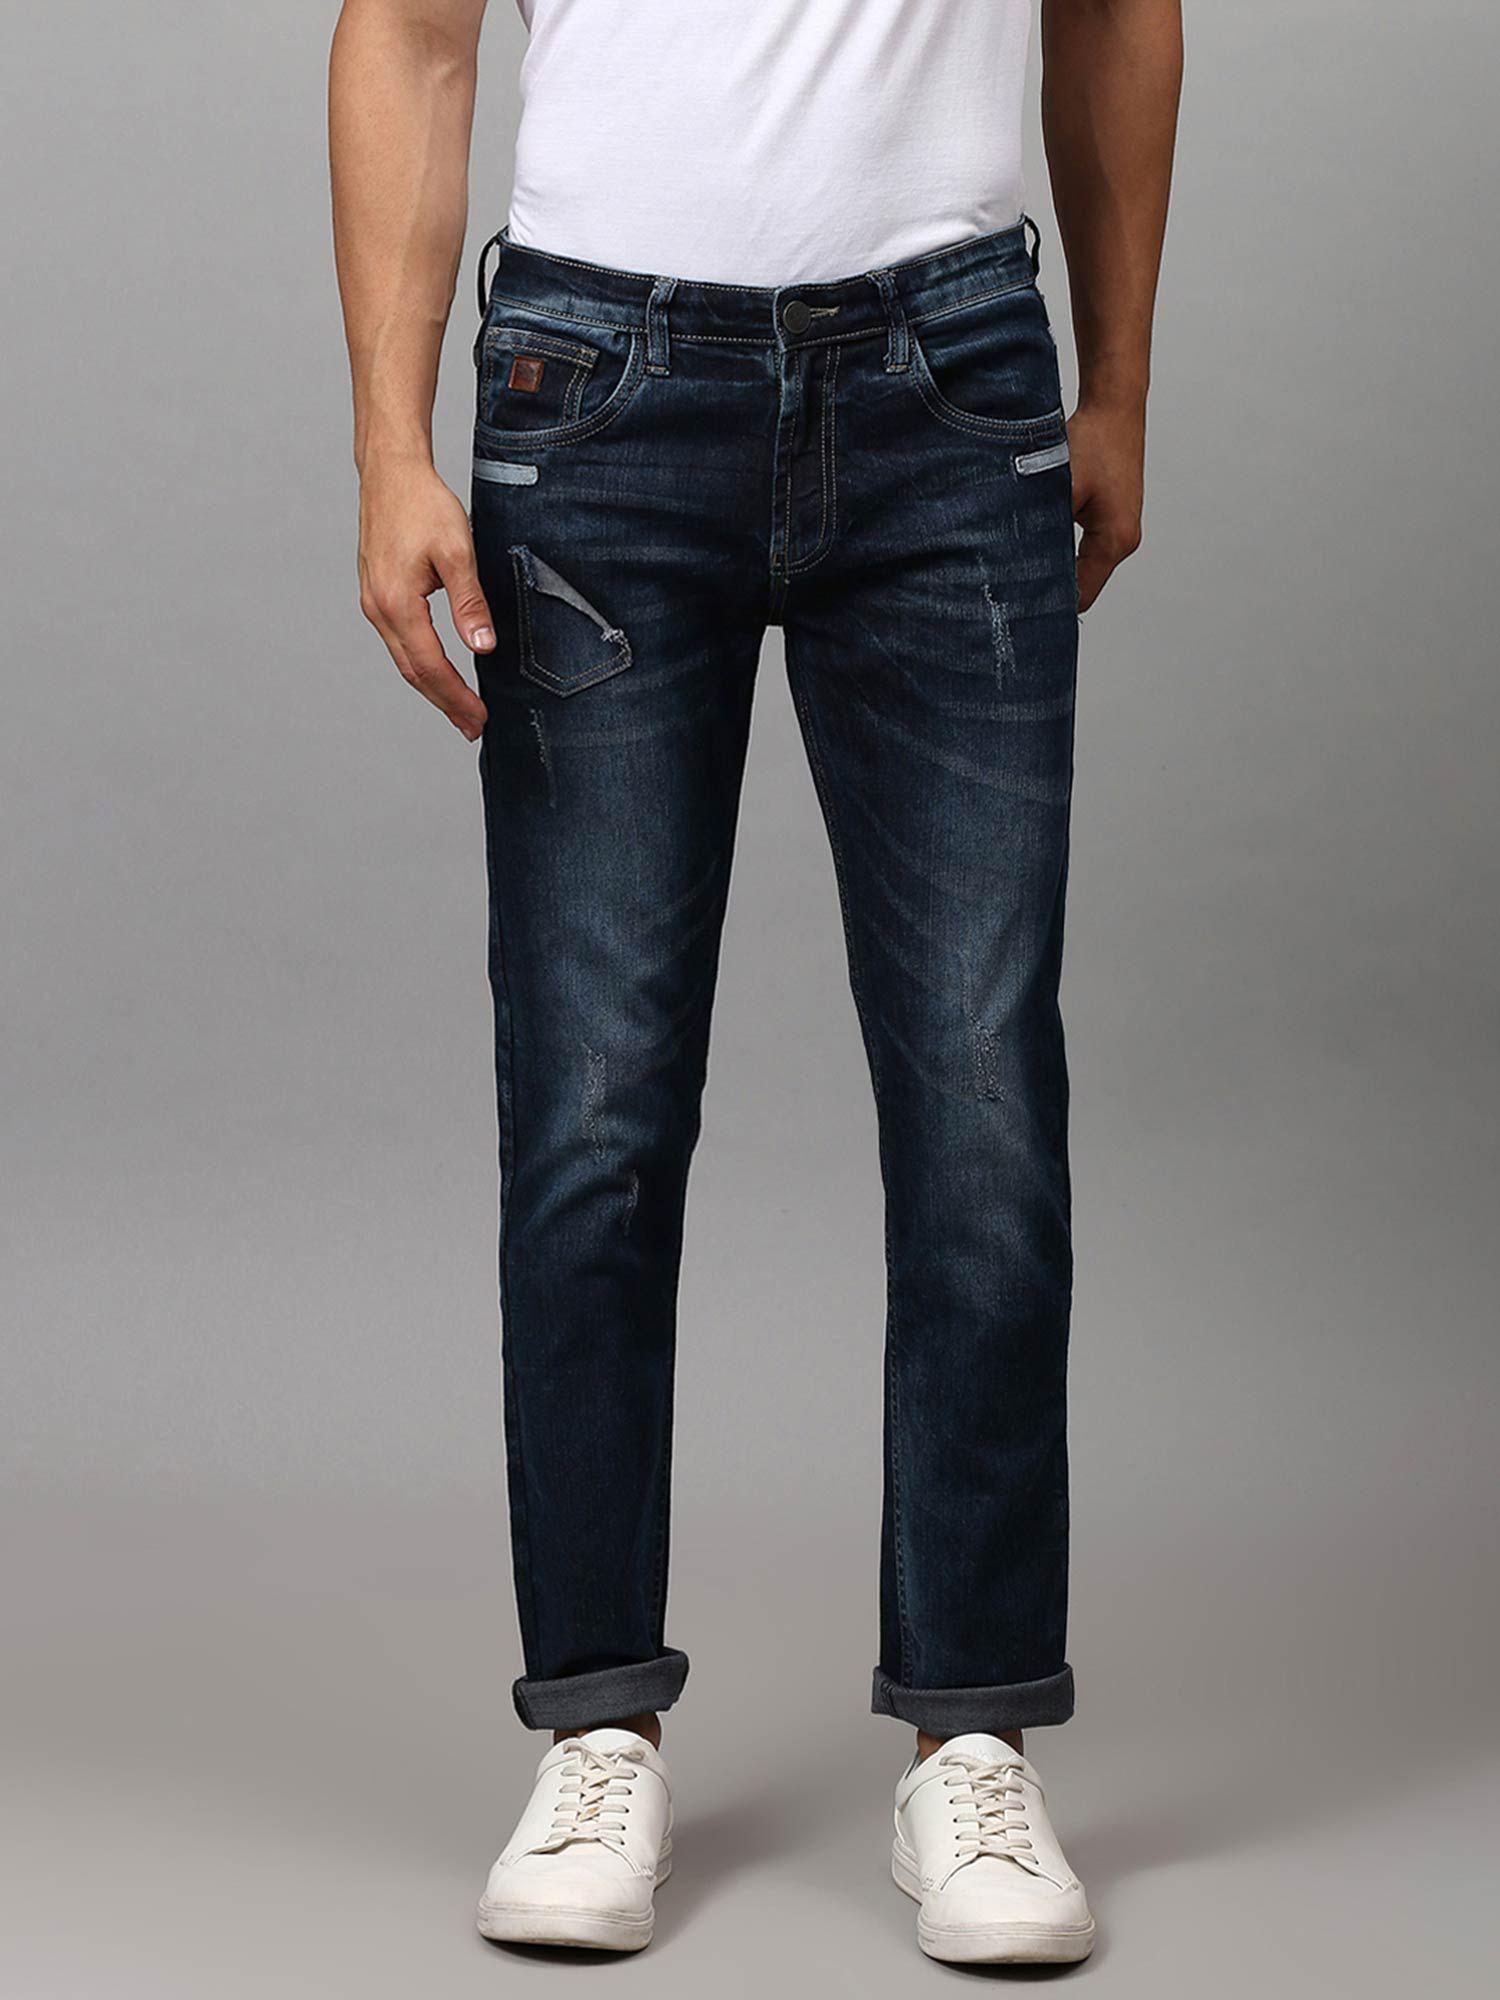 men front type stylish casual denim jeans